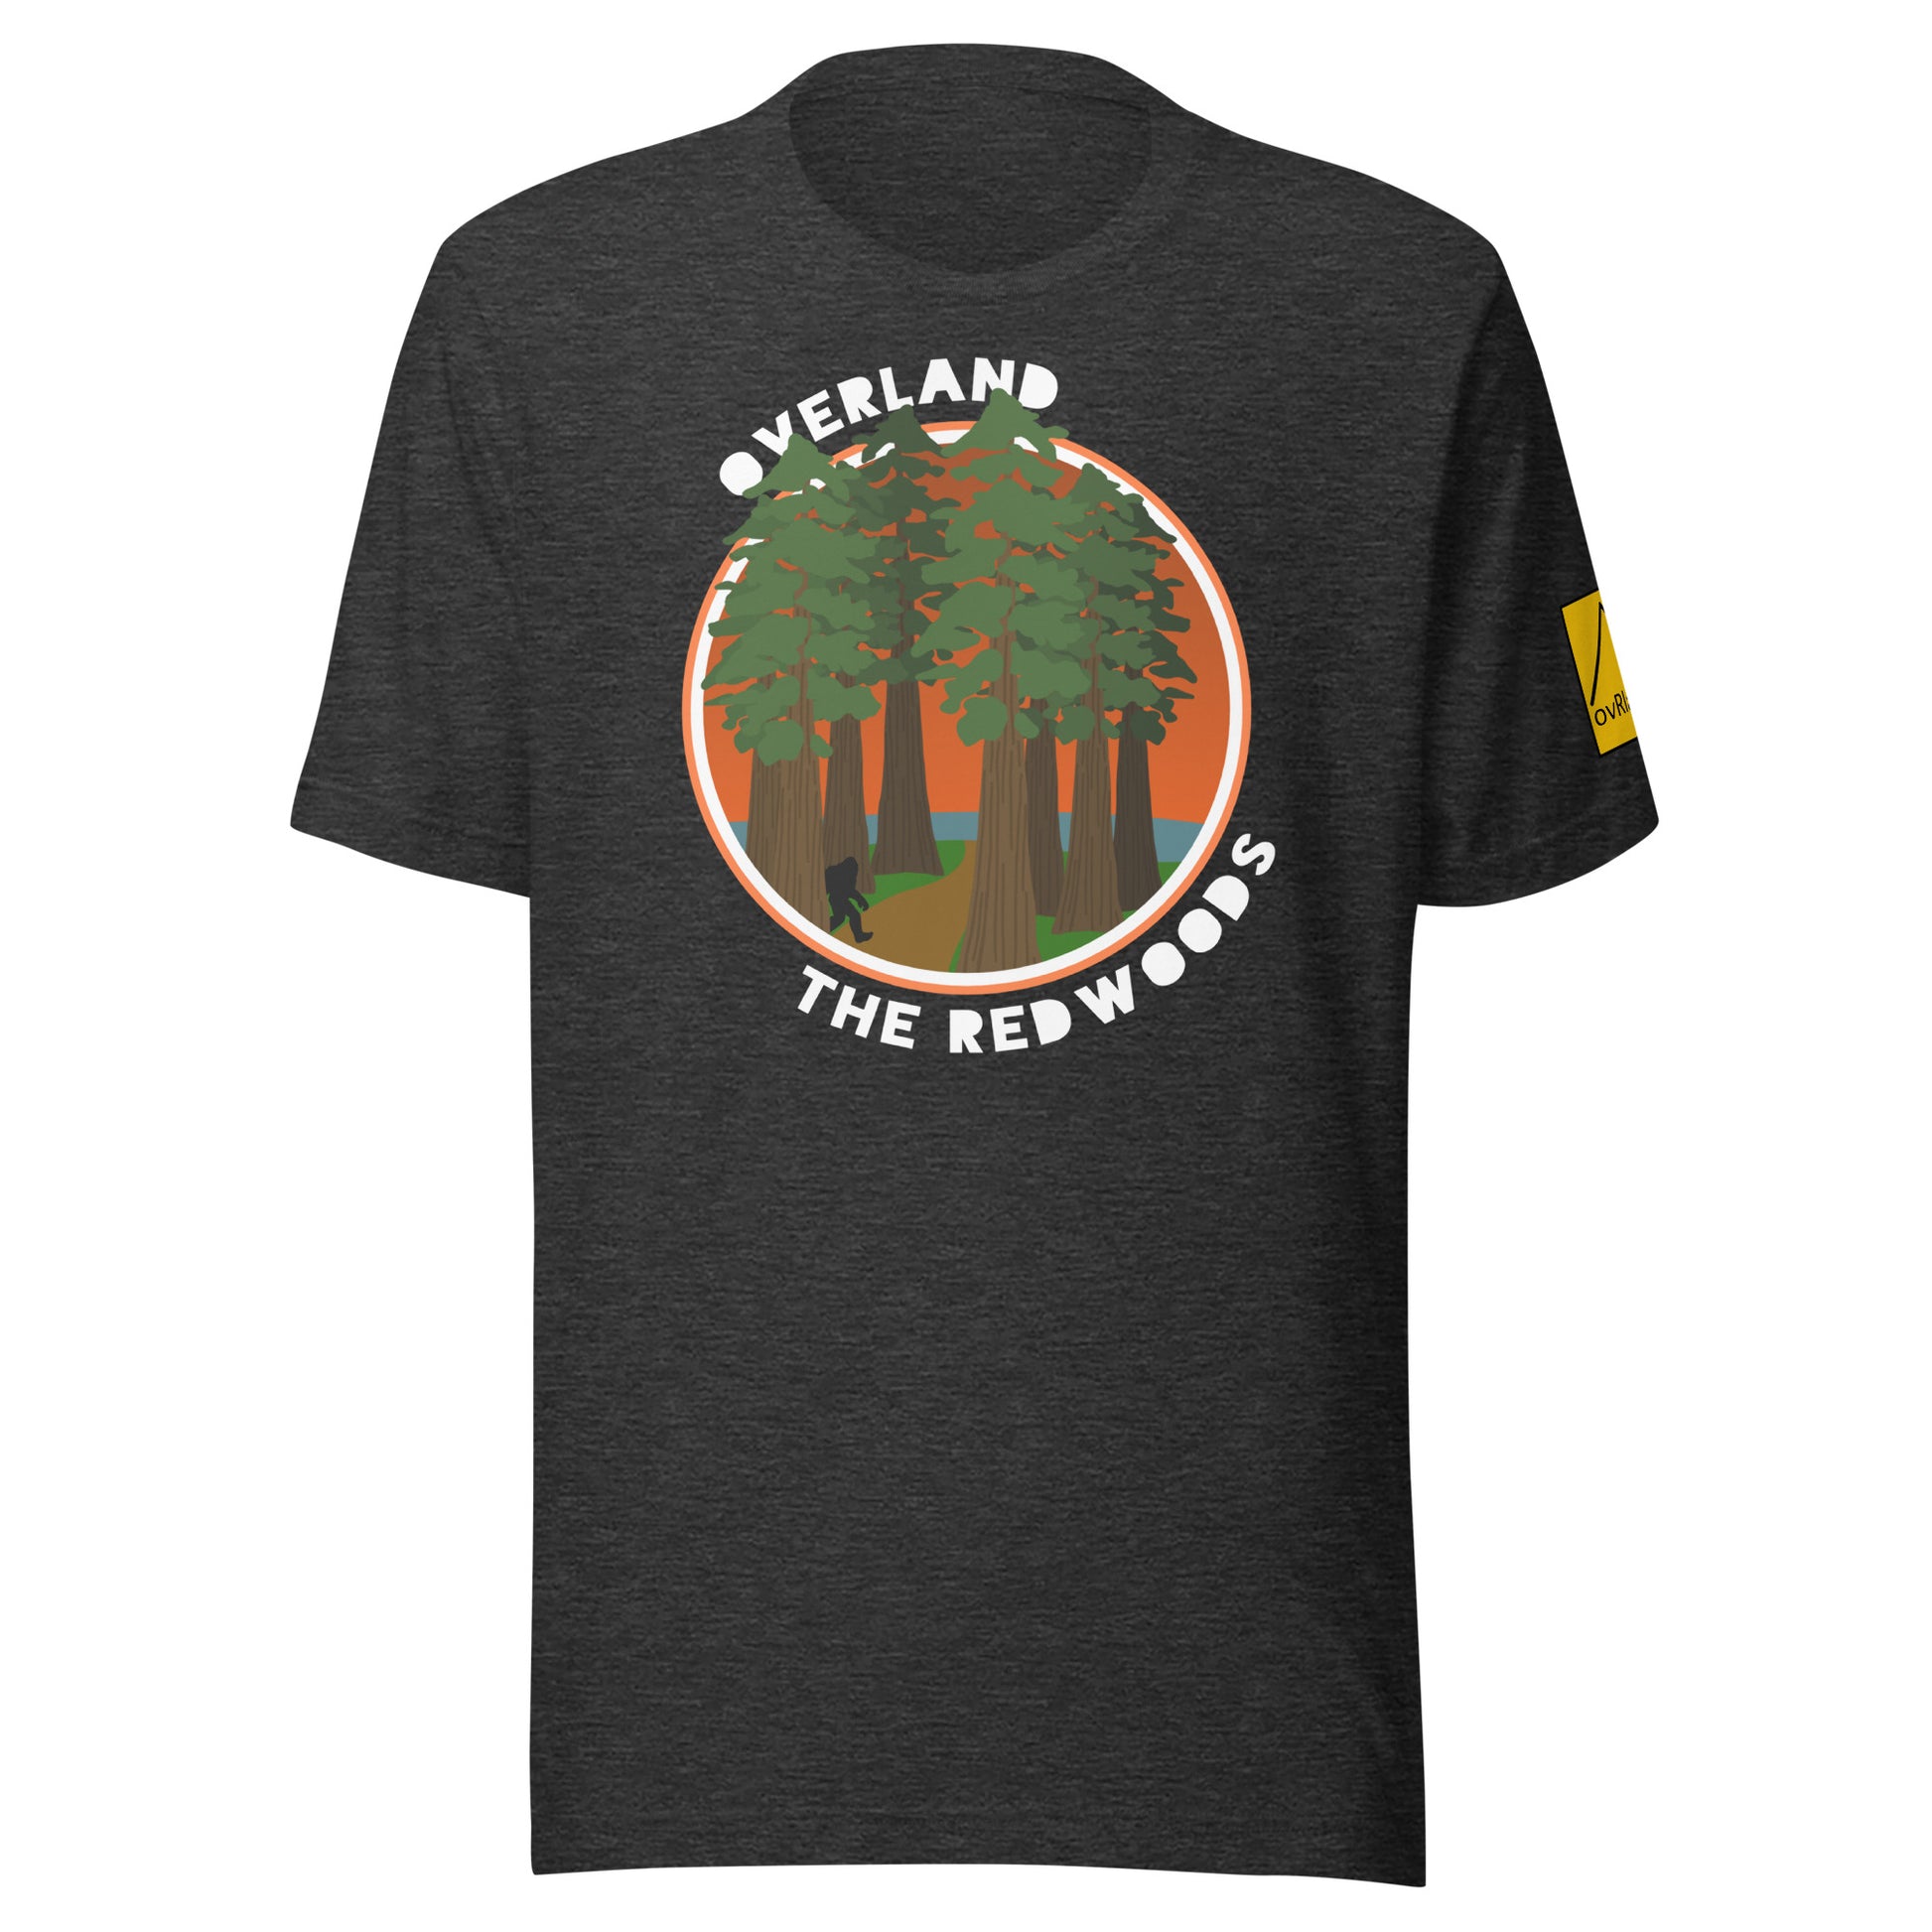 Overland the Redwoods. Bigfoot country. Dark Grey t-shirt. overland365.com